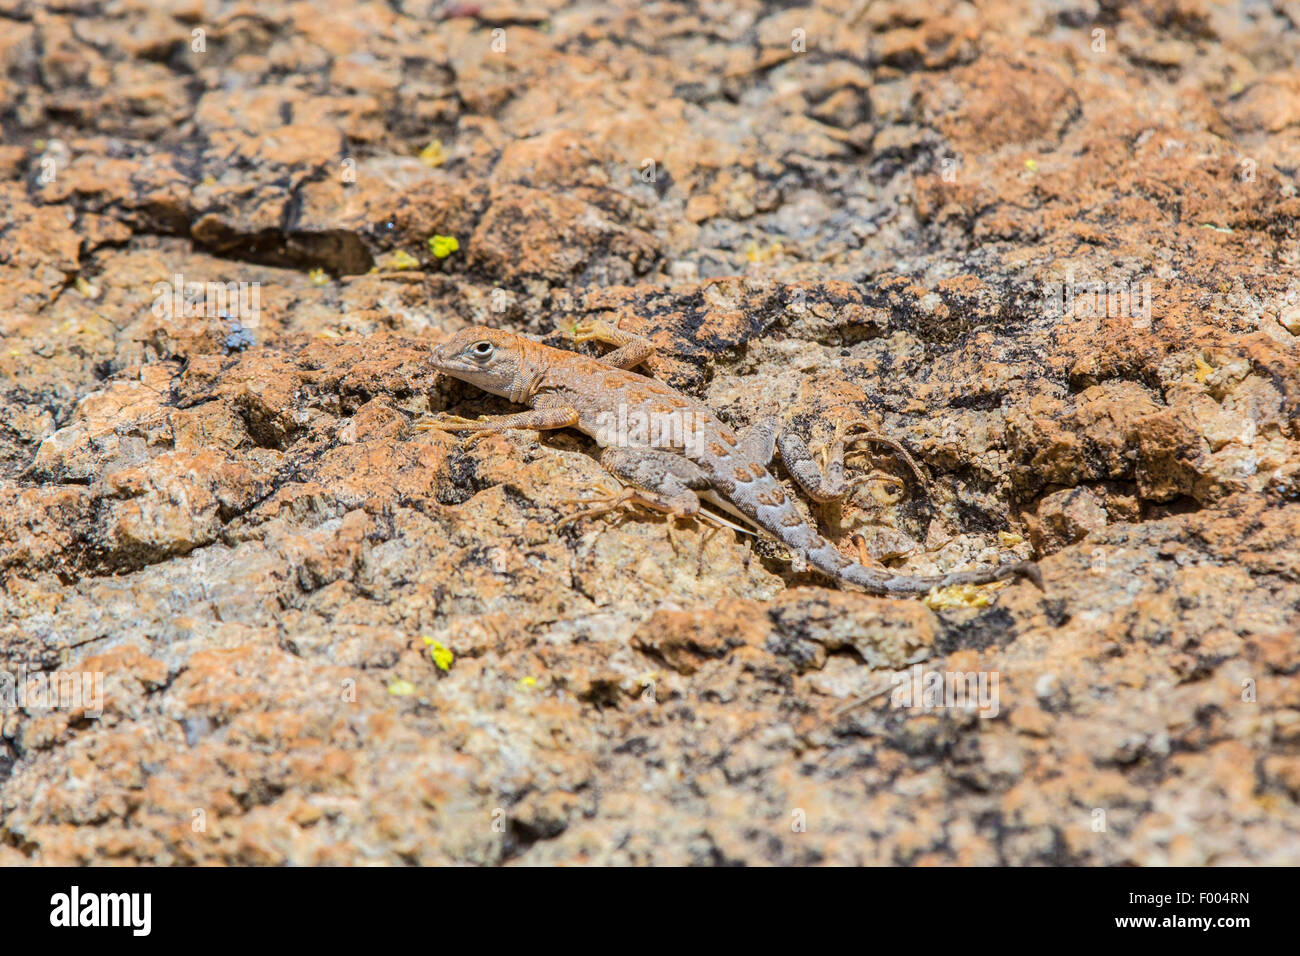 Elegant Earless Lizard (cf. Holbrookia elegans), well camouflaged on rock, USA, Arizona Stock Photo